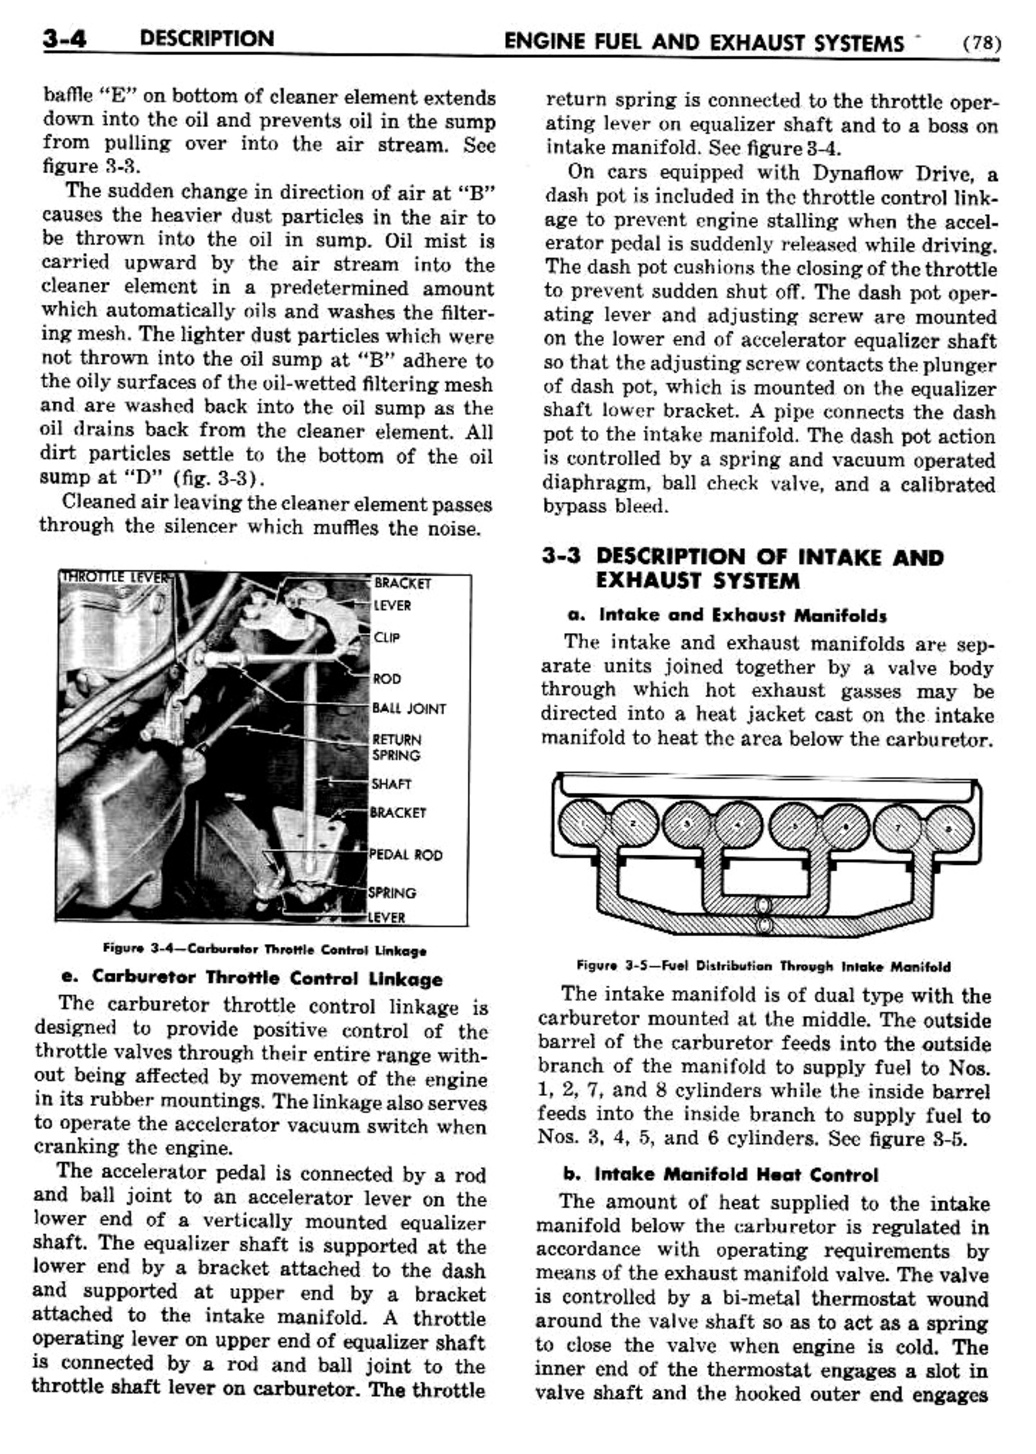 n_04 1948 Buick Shop Manual - Engine Fuel & Exhaust-004-004.jpg